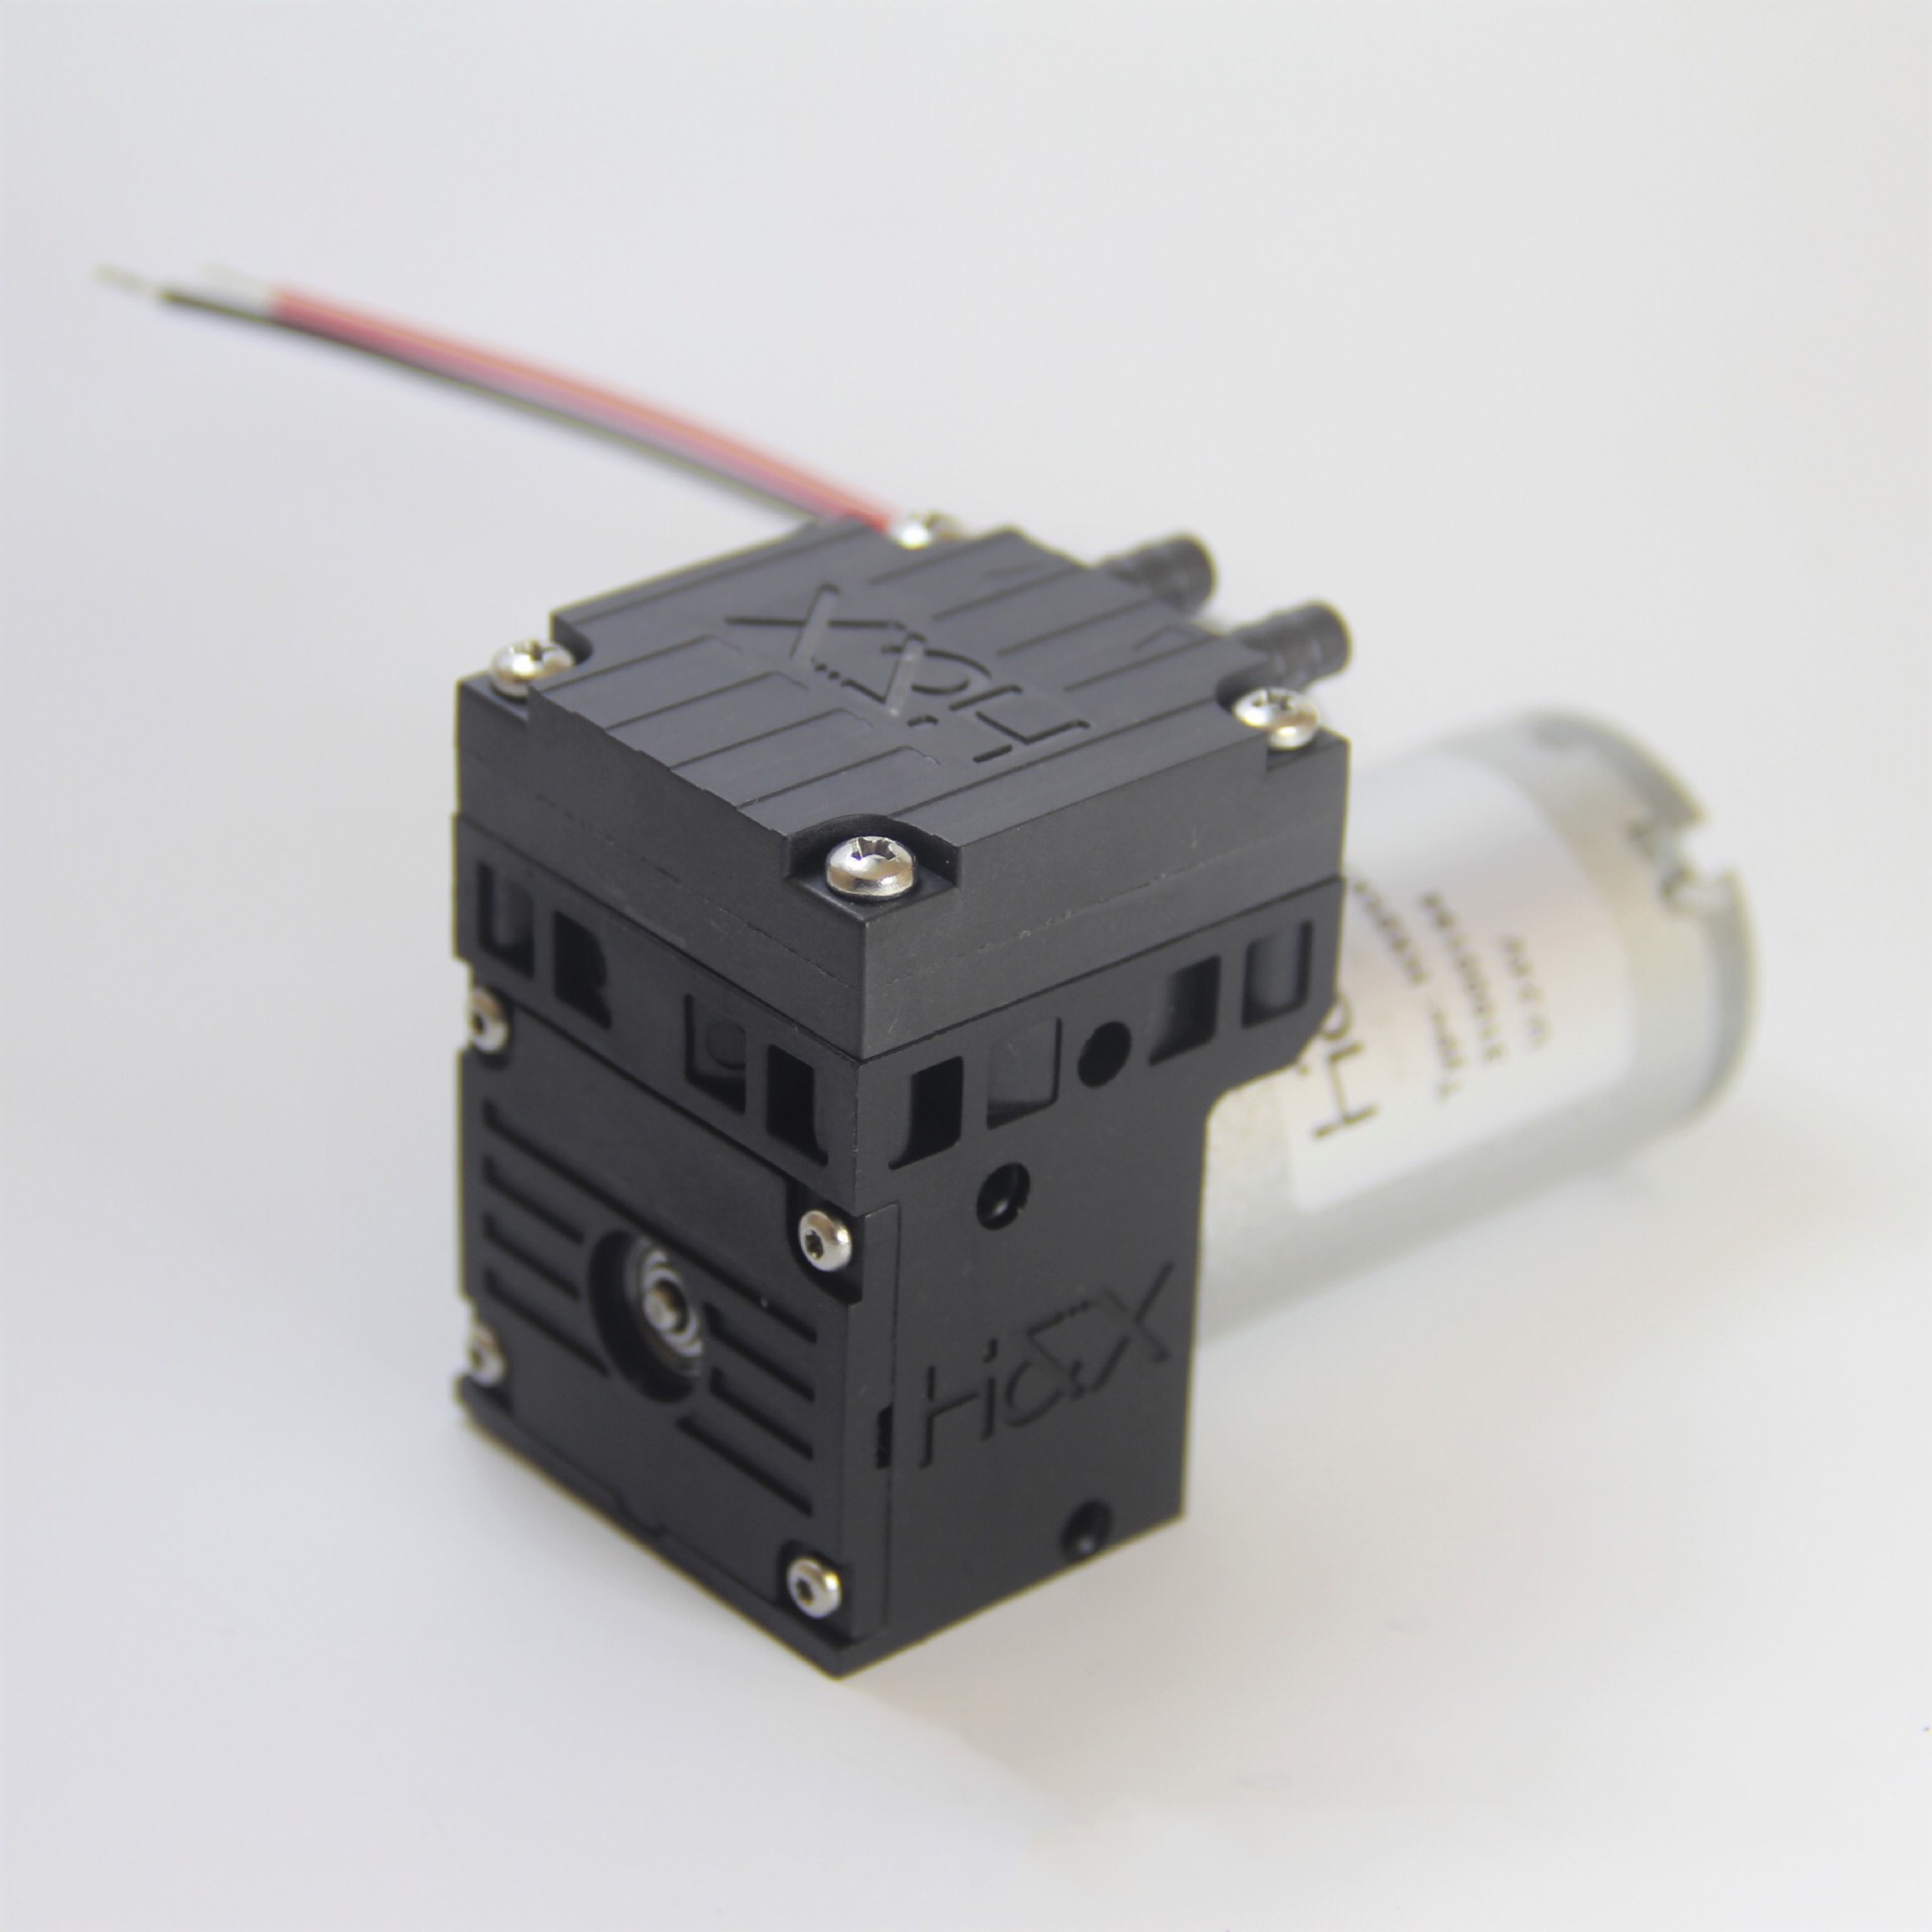 HX05-DC 12V/24V Brush 4.5L/min 1.5bar Miniature Diaphragm Vacuum Pump Mini Air Pump Small Industrial Pump